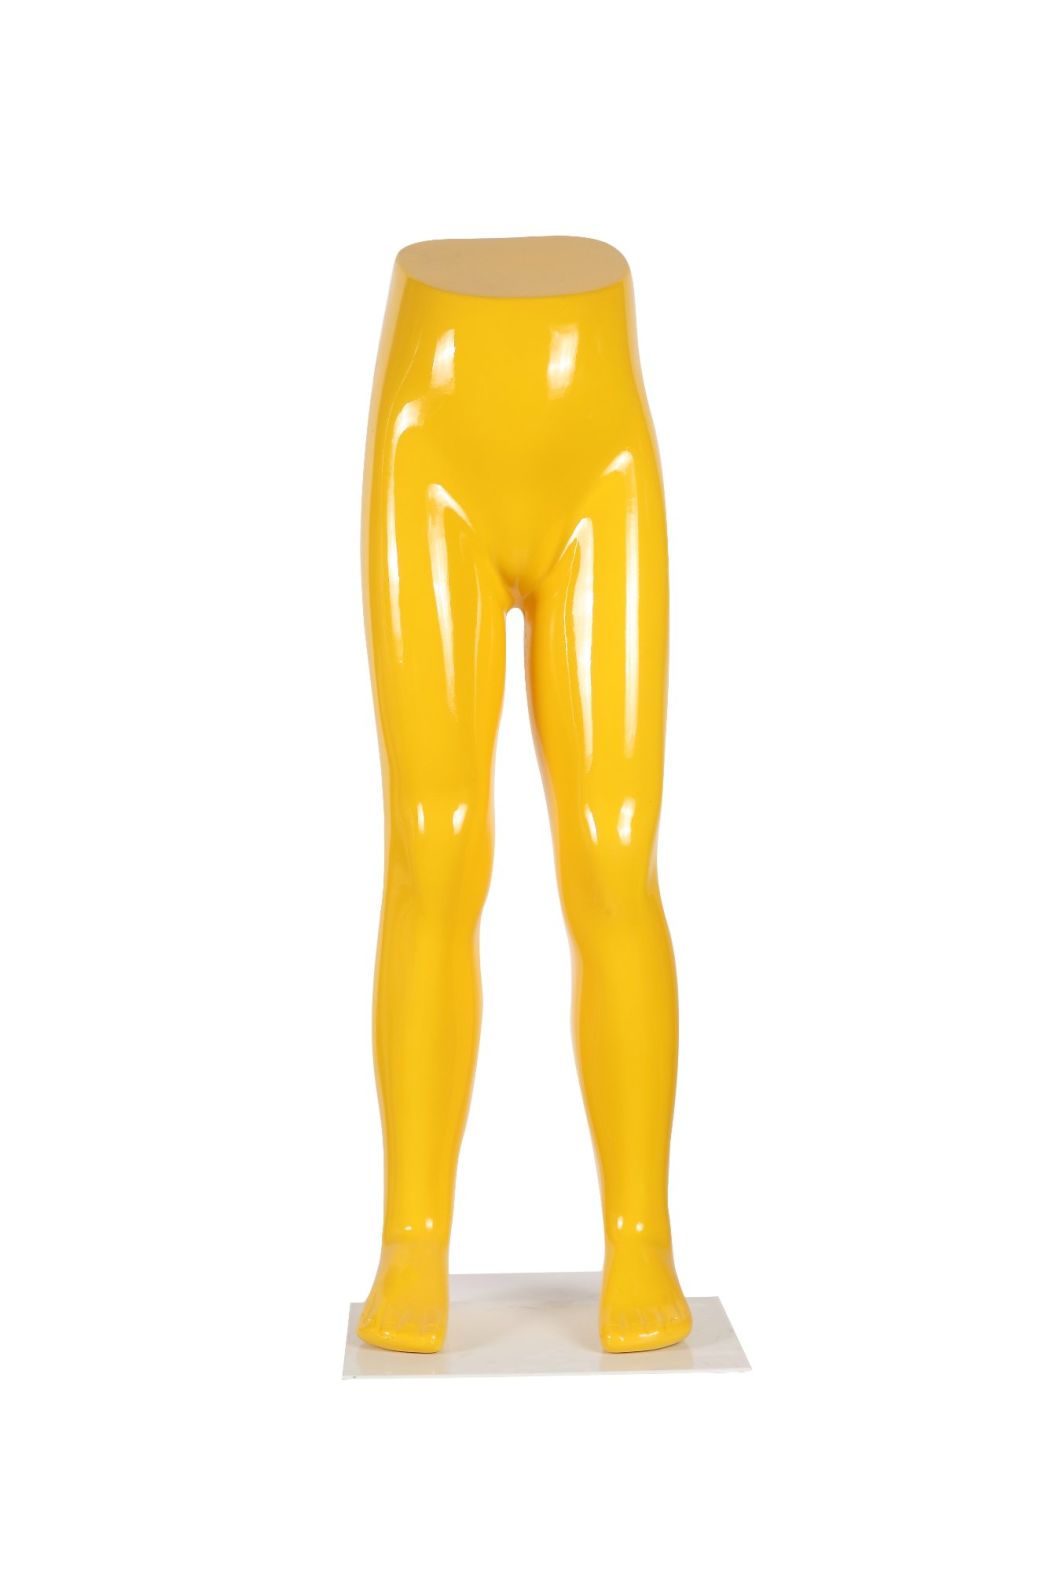 New Style Bright Color Kids Legs Mannequin (73CM)